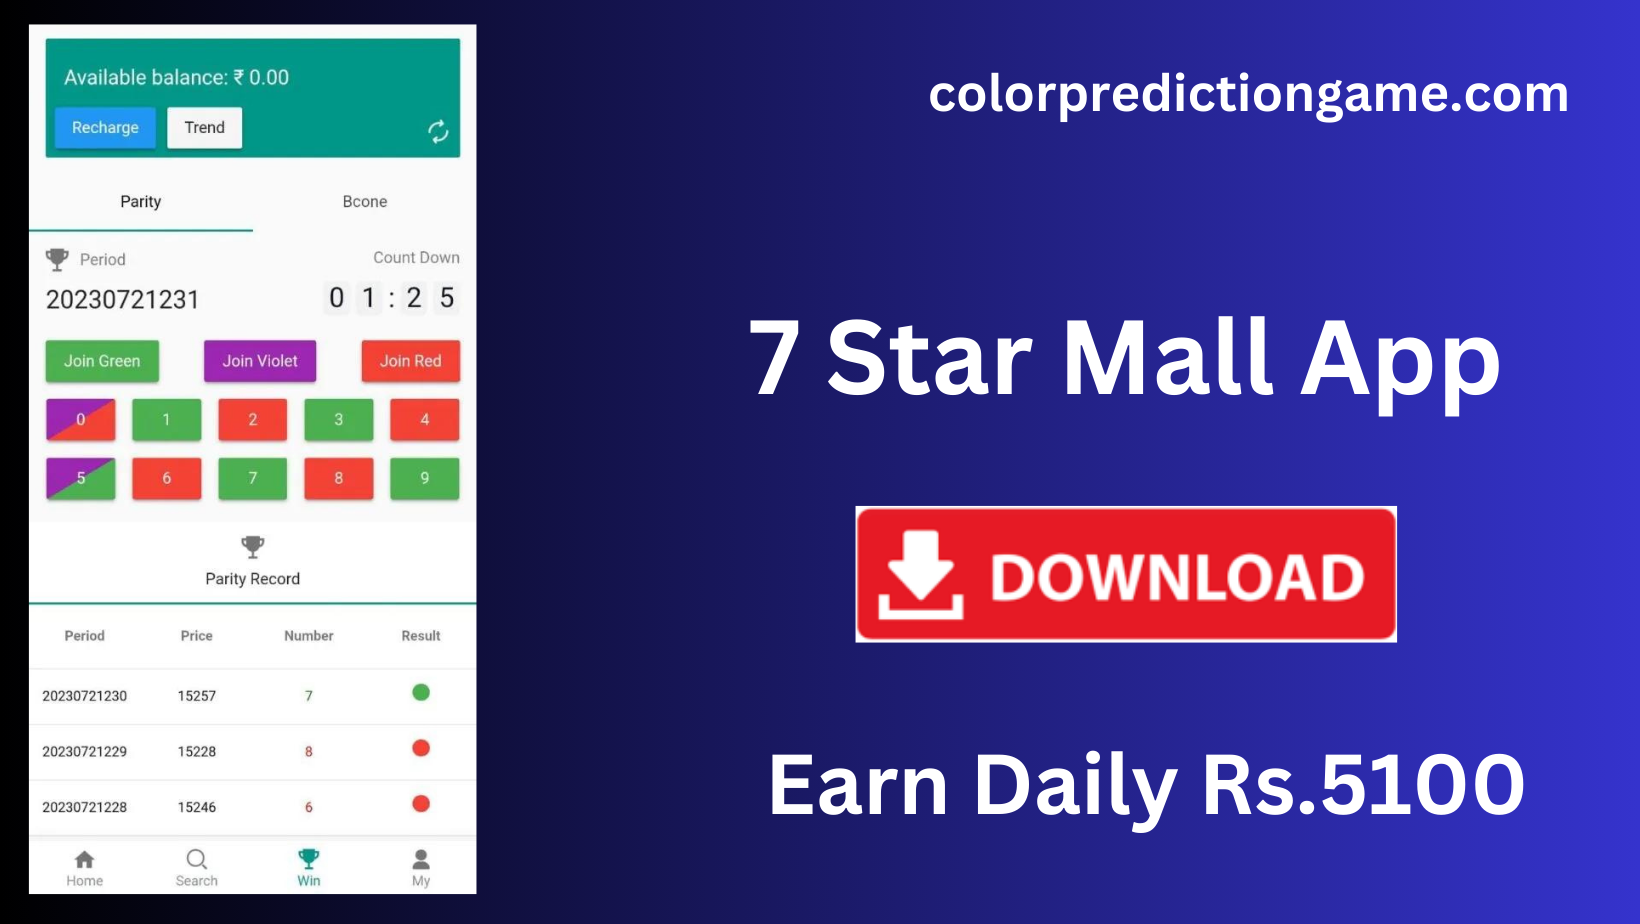 7 Stars Mall App